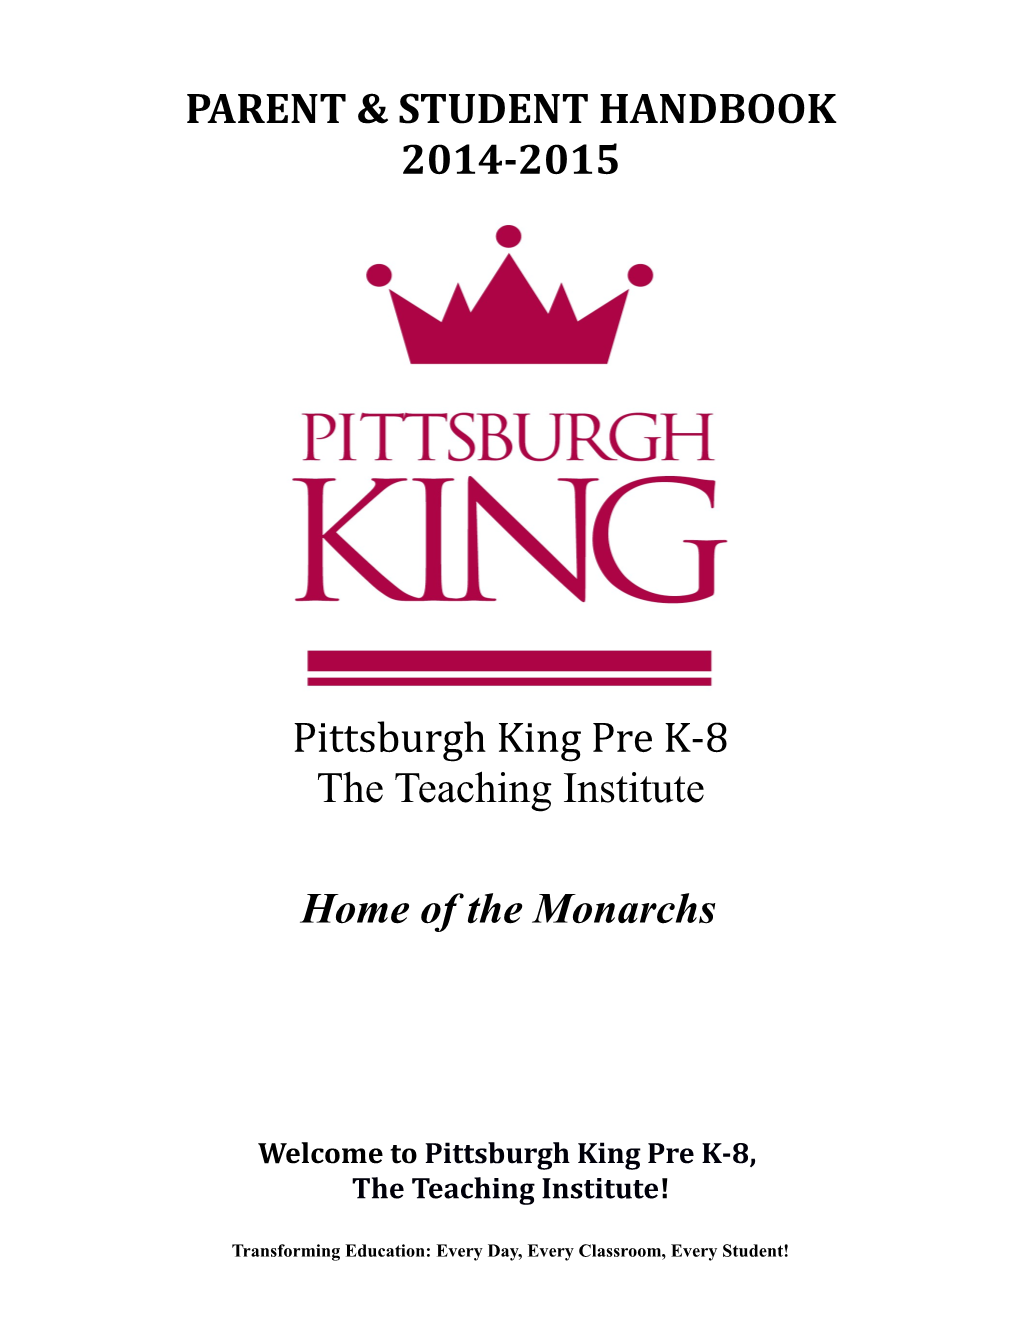 Parent & Student Handbook Pittsburgh King Prek-8